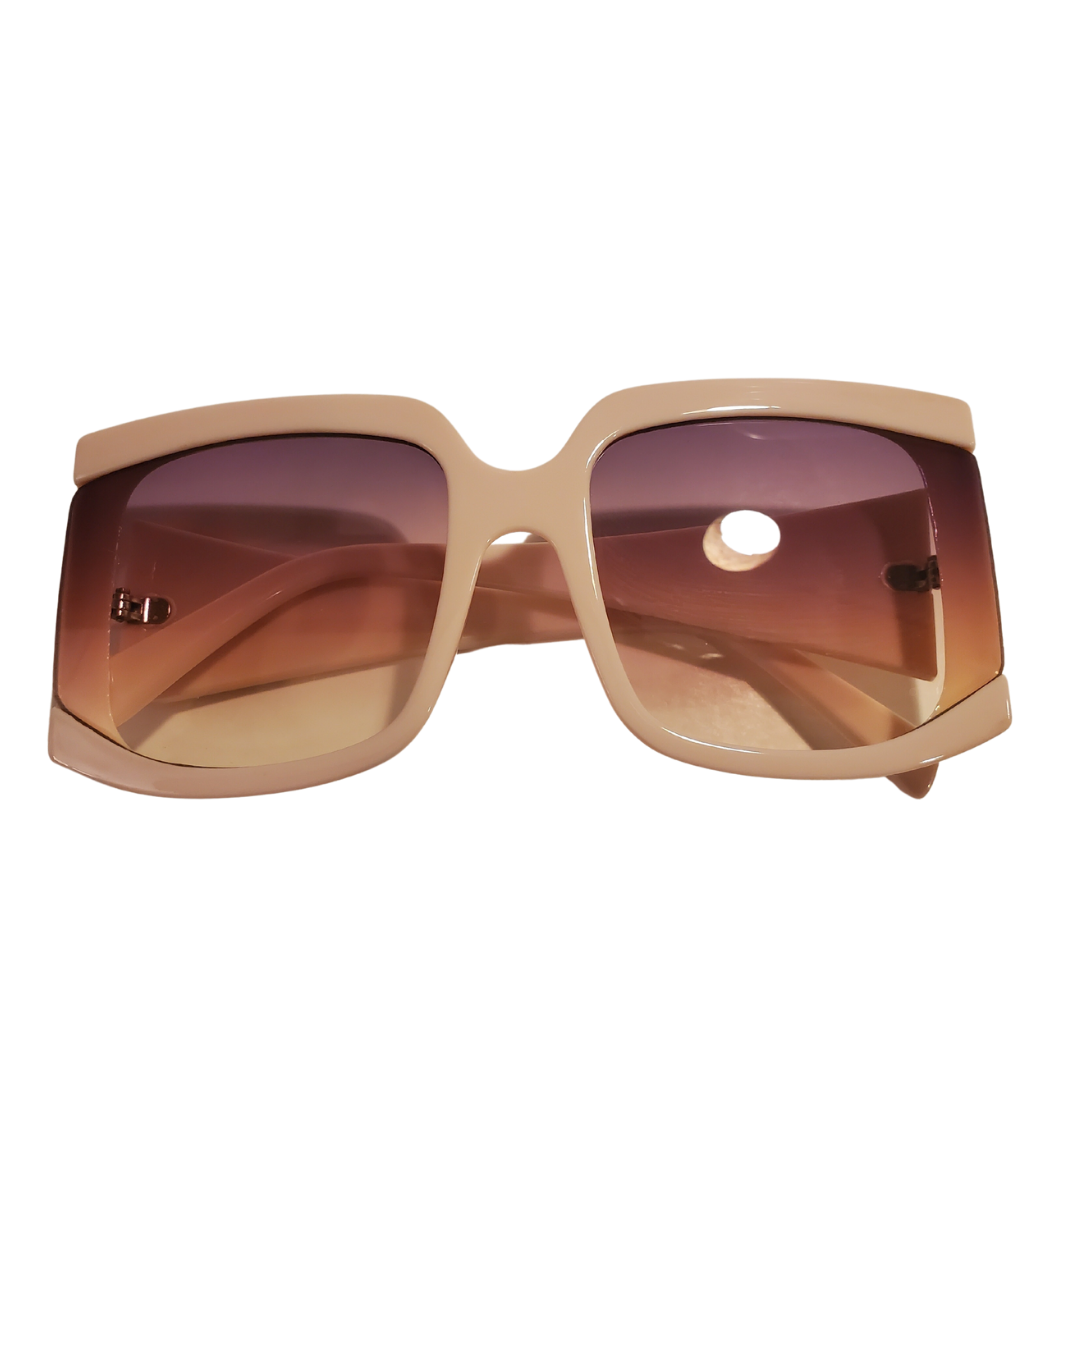 image of tan sunglasses